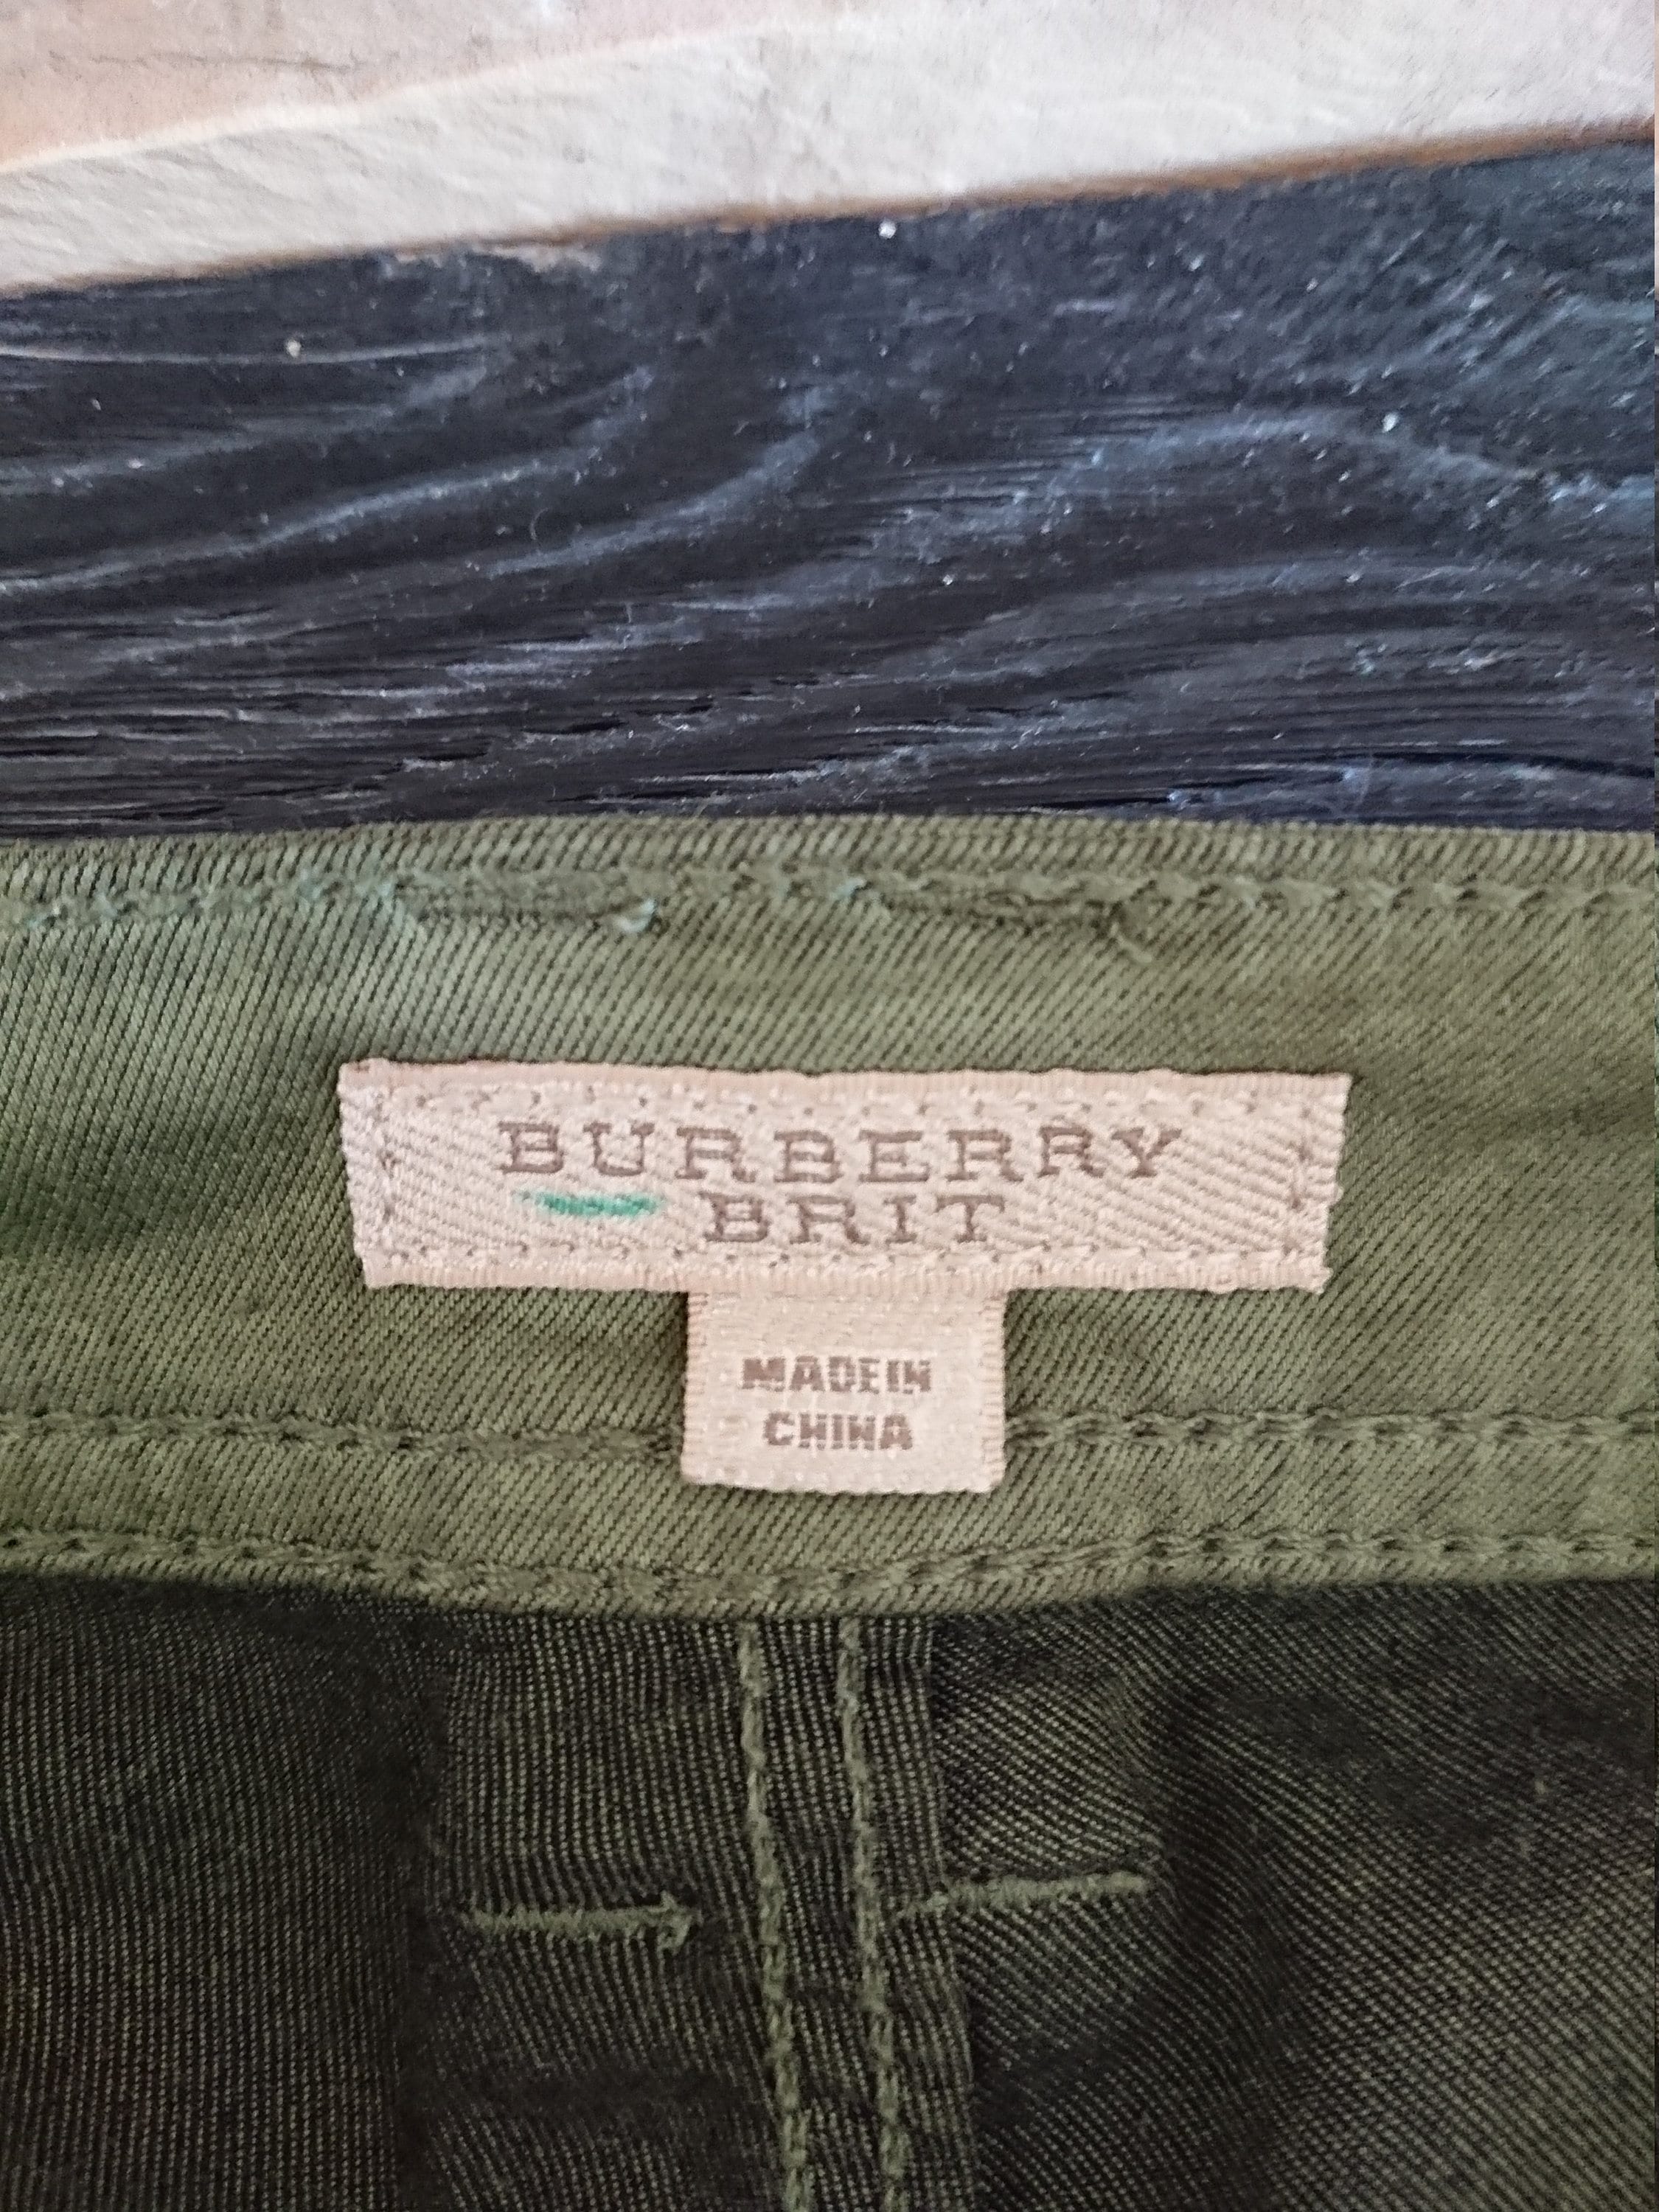 Burberry Brit Vintage Pilton Jeans Pants Skinny Ankle Green 